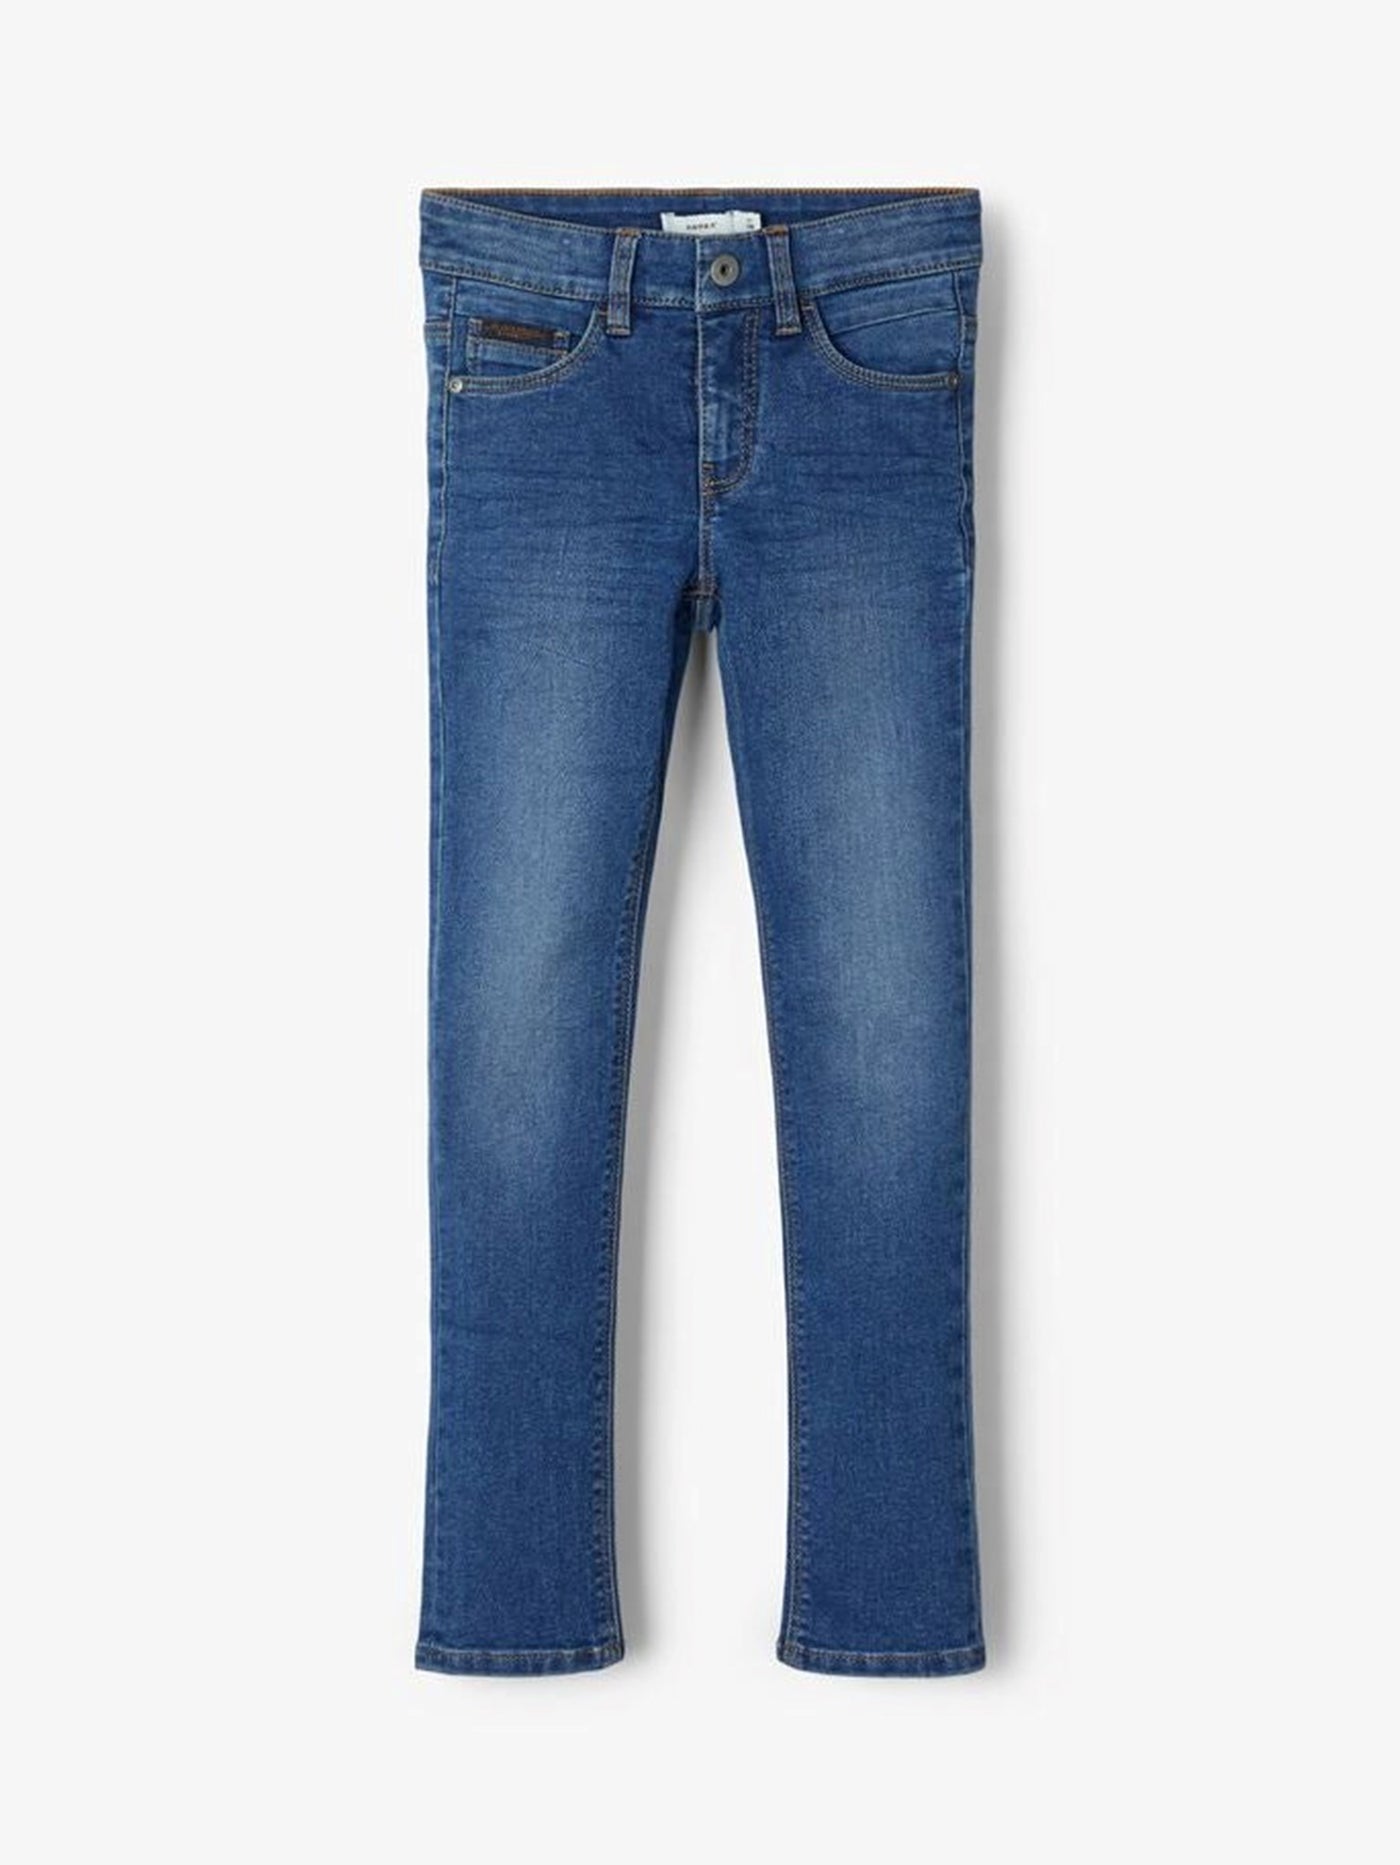 X-slim fit Jeans - Medium Blue Denim - Name It